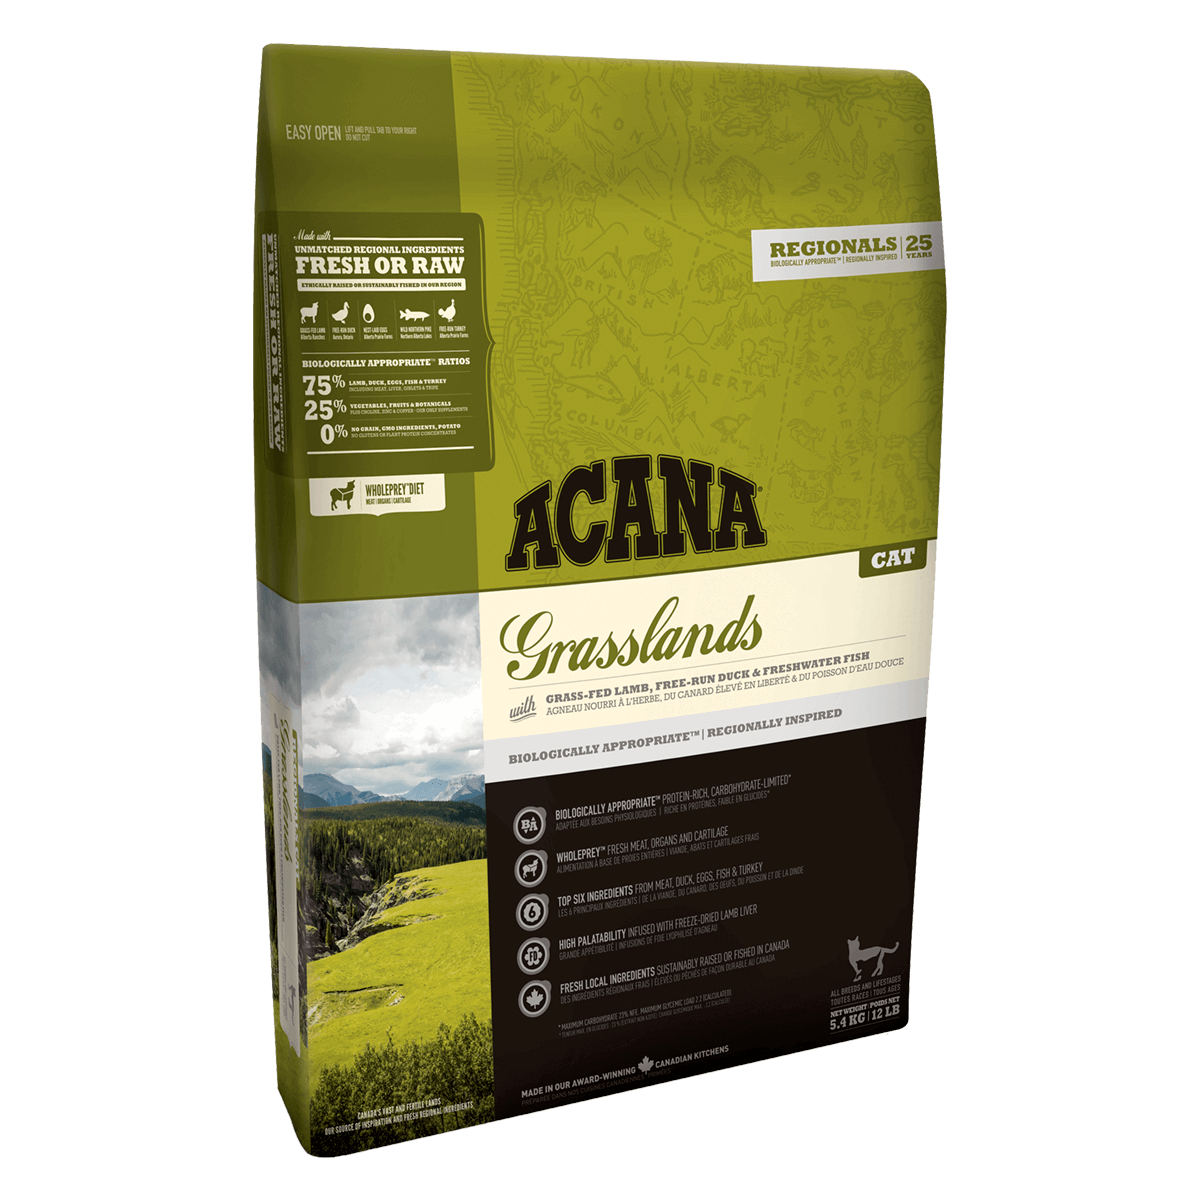 Acana Grasslands Сat 37/20, 1,8 кг - корм Акана для кошек